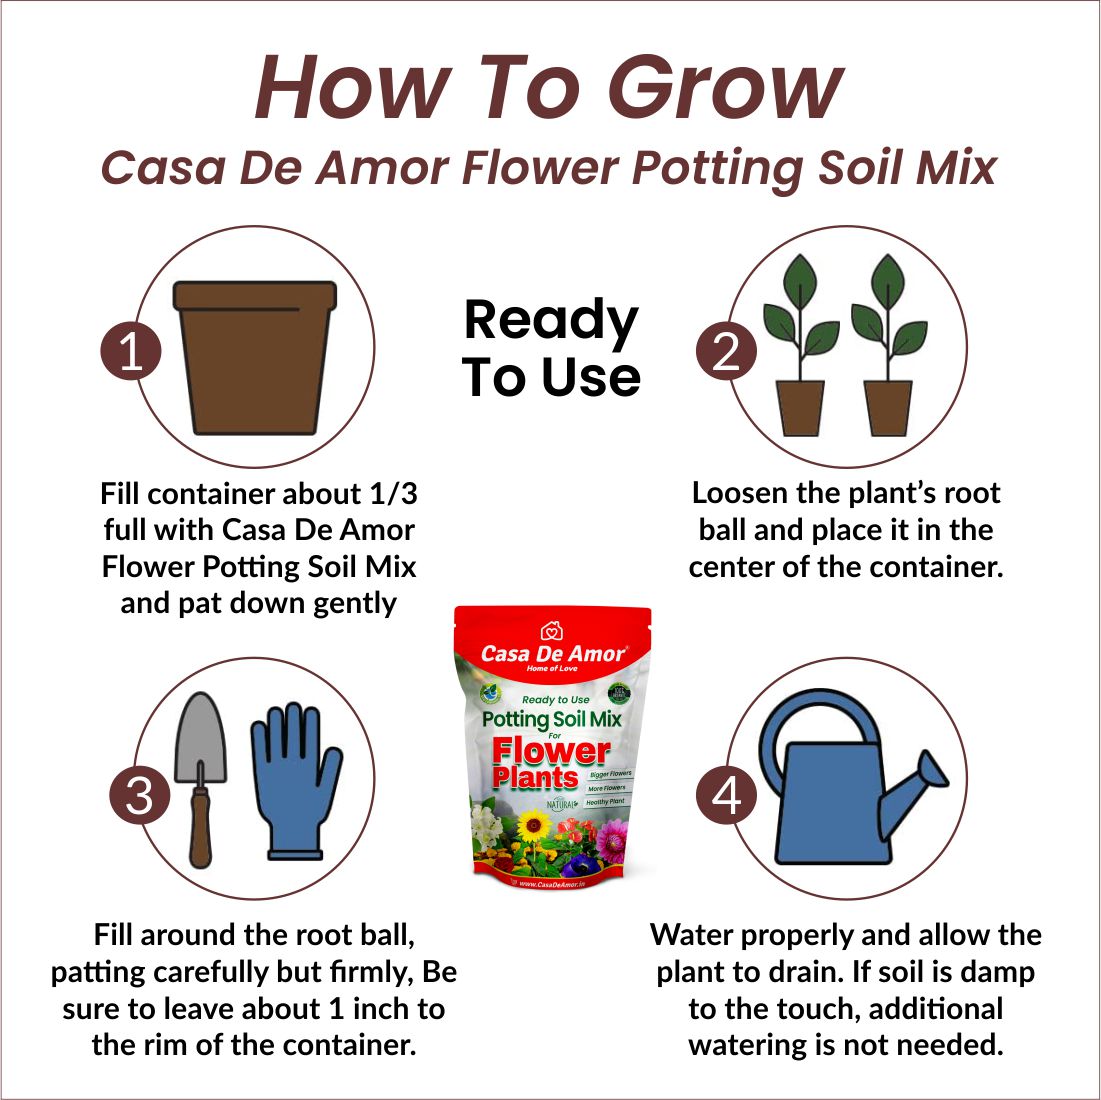 Casa De Amor Organic Flower Potting Soil Mix for Home Garden Flower Plants, Ready to Use